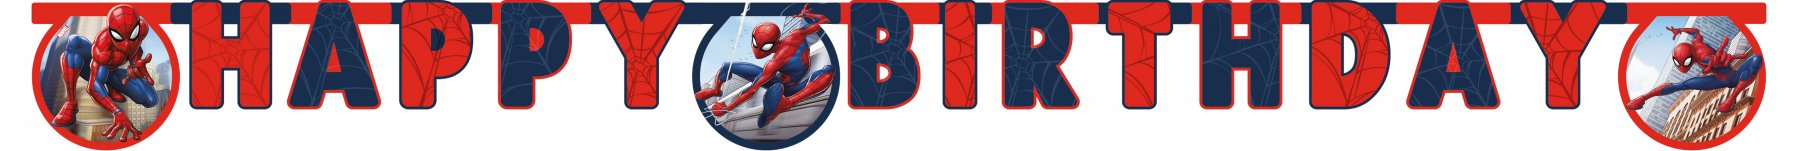 Procos Banner Happy Birthday - Spiderman Crime